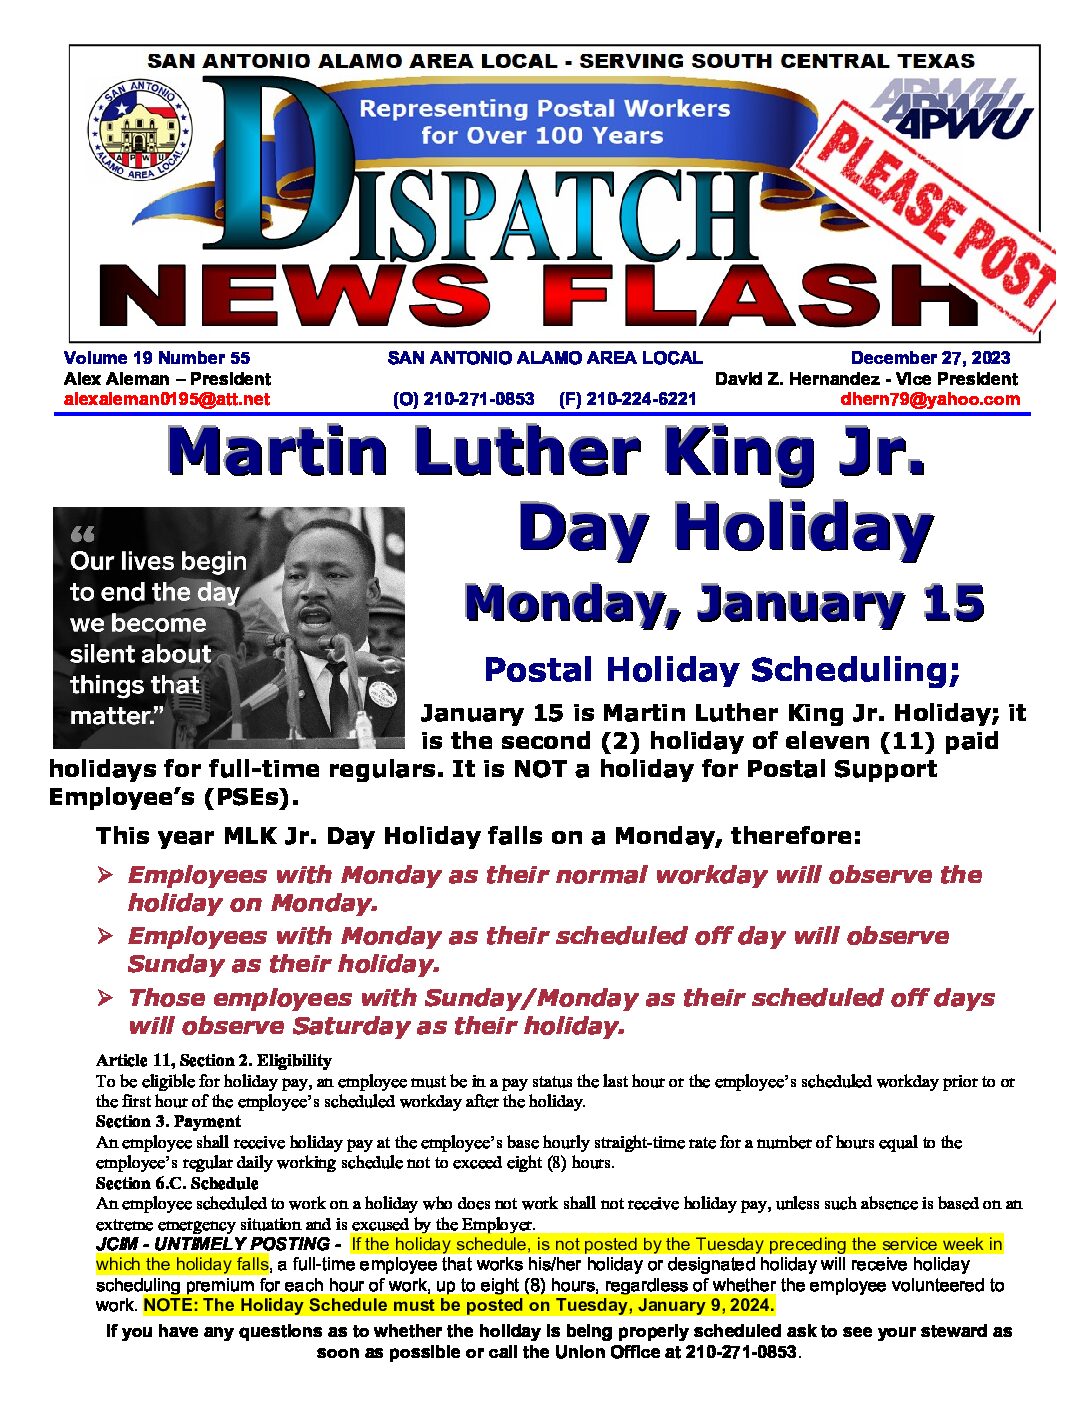 NewsFlash 19-55 MLK Jr. Day Holiday Scheduling - 